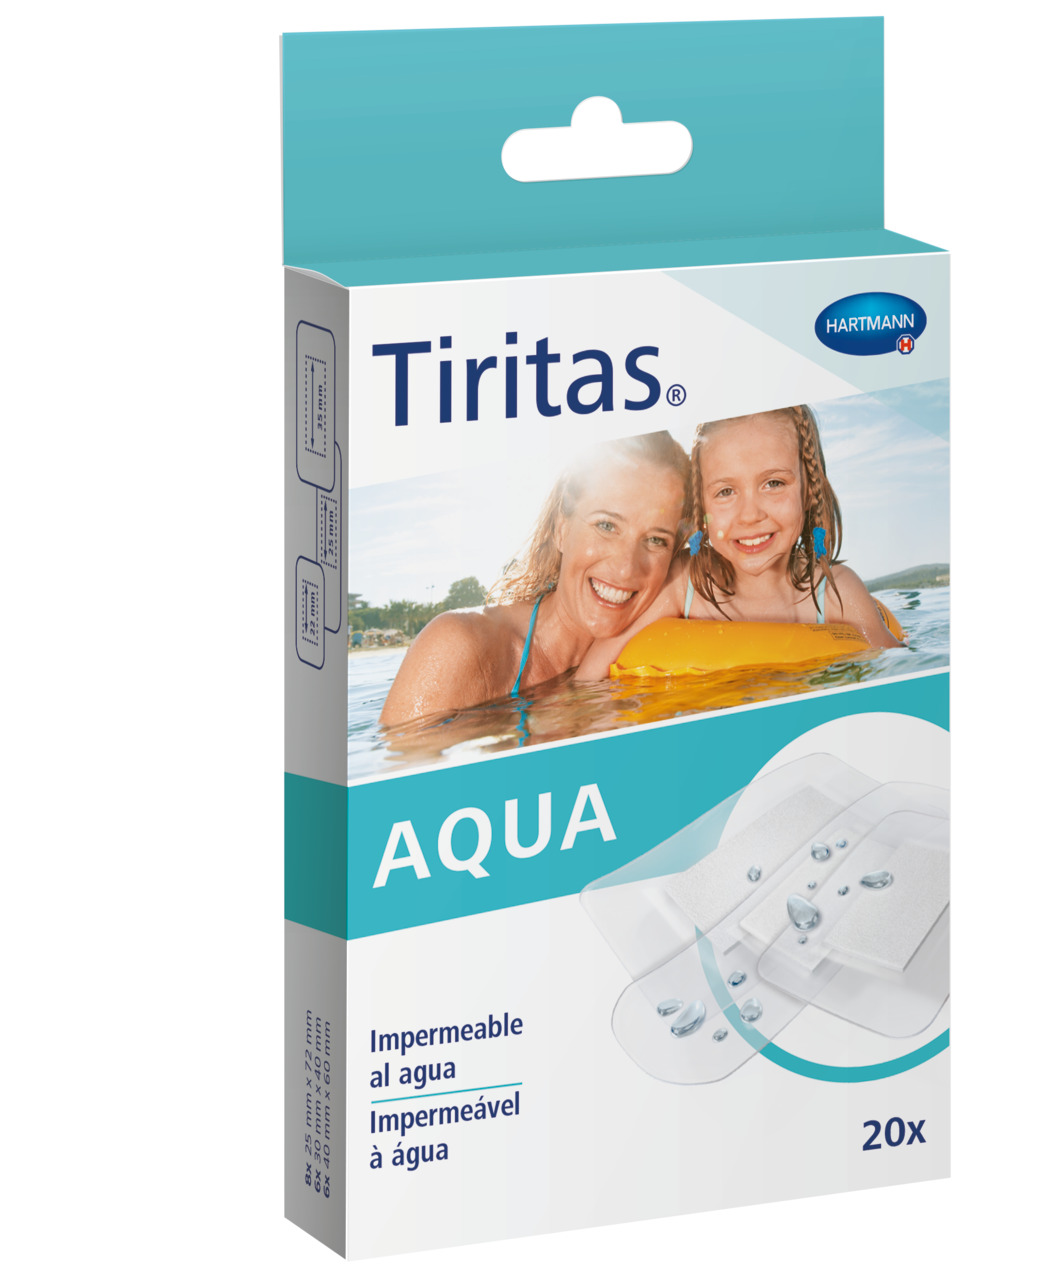 Tiritas® Aqua – HARTMANN Direct